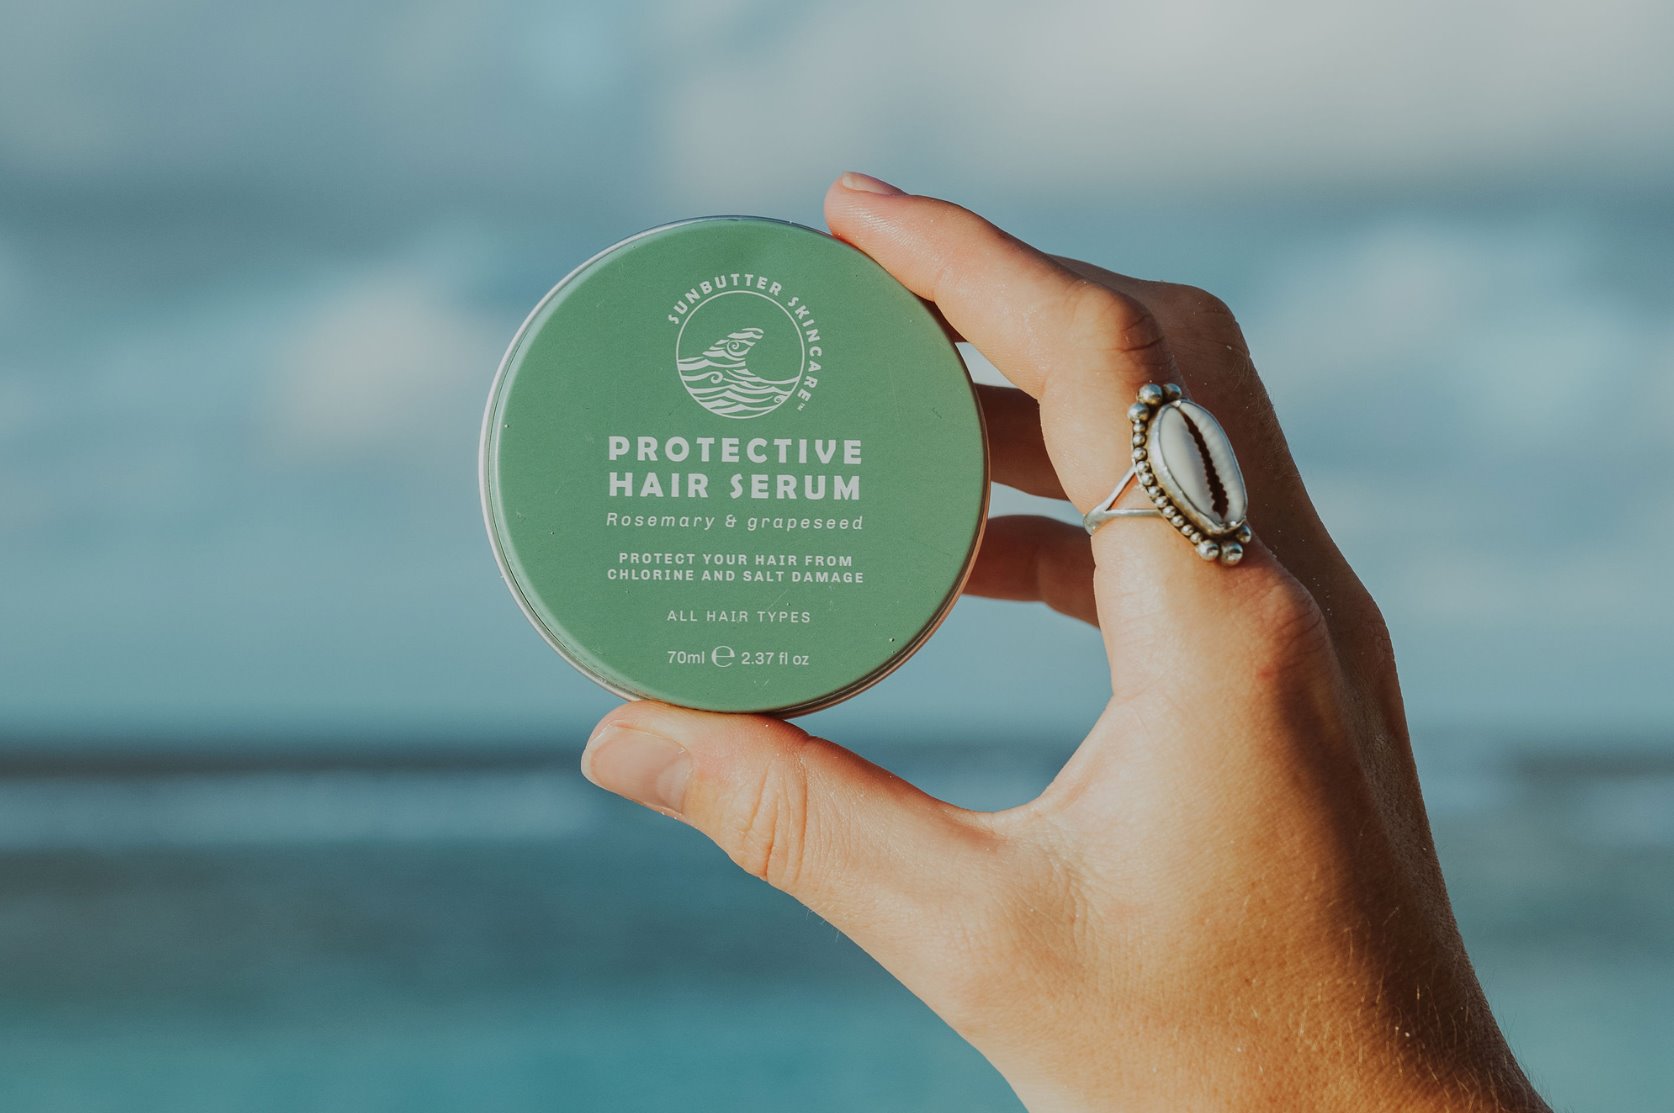 Protective Hair Serum SunButter Skincare 